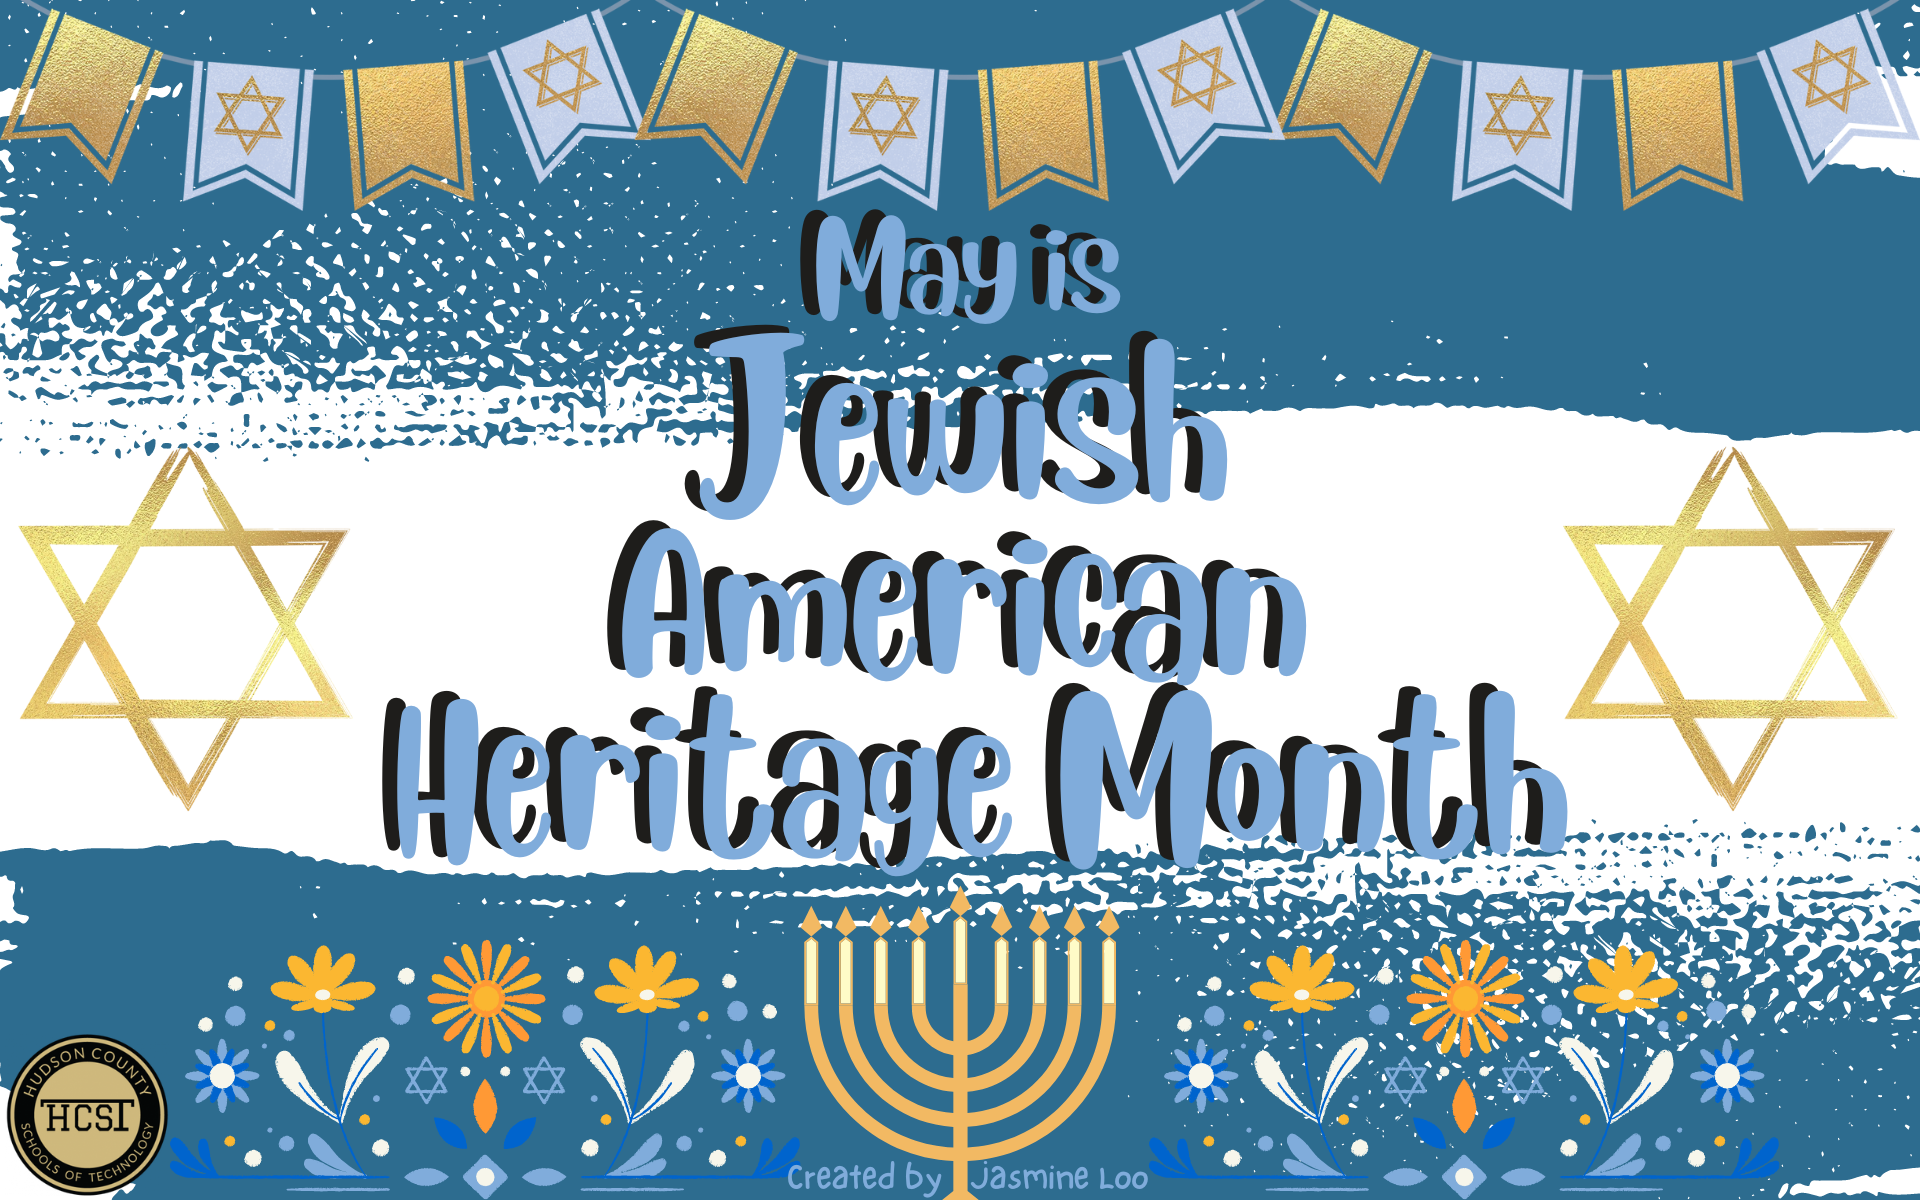 Jewish-American Heritage Month